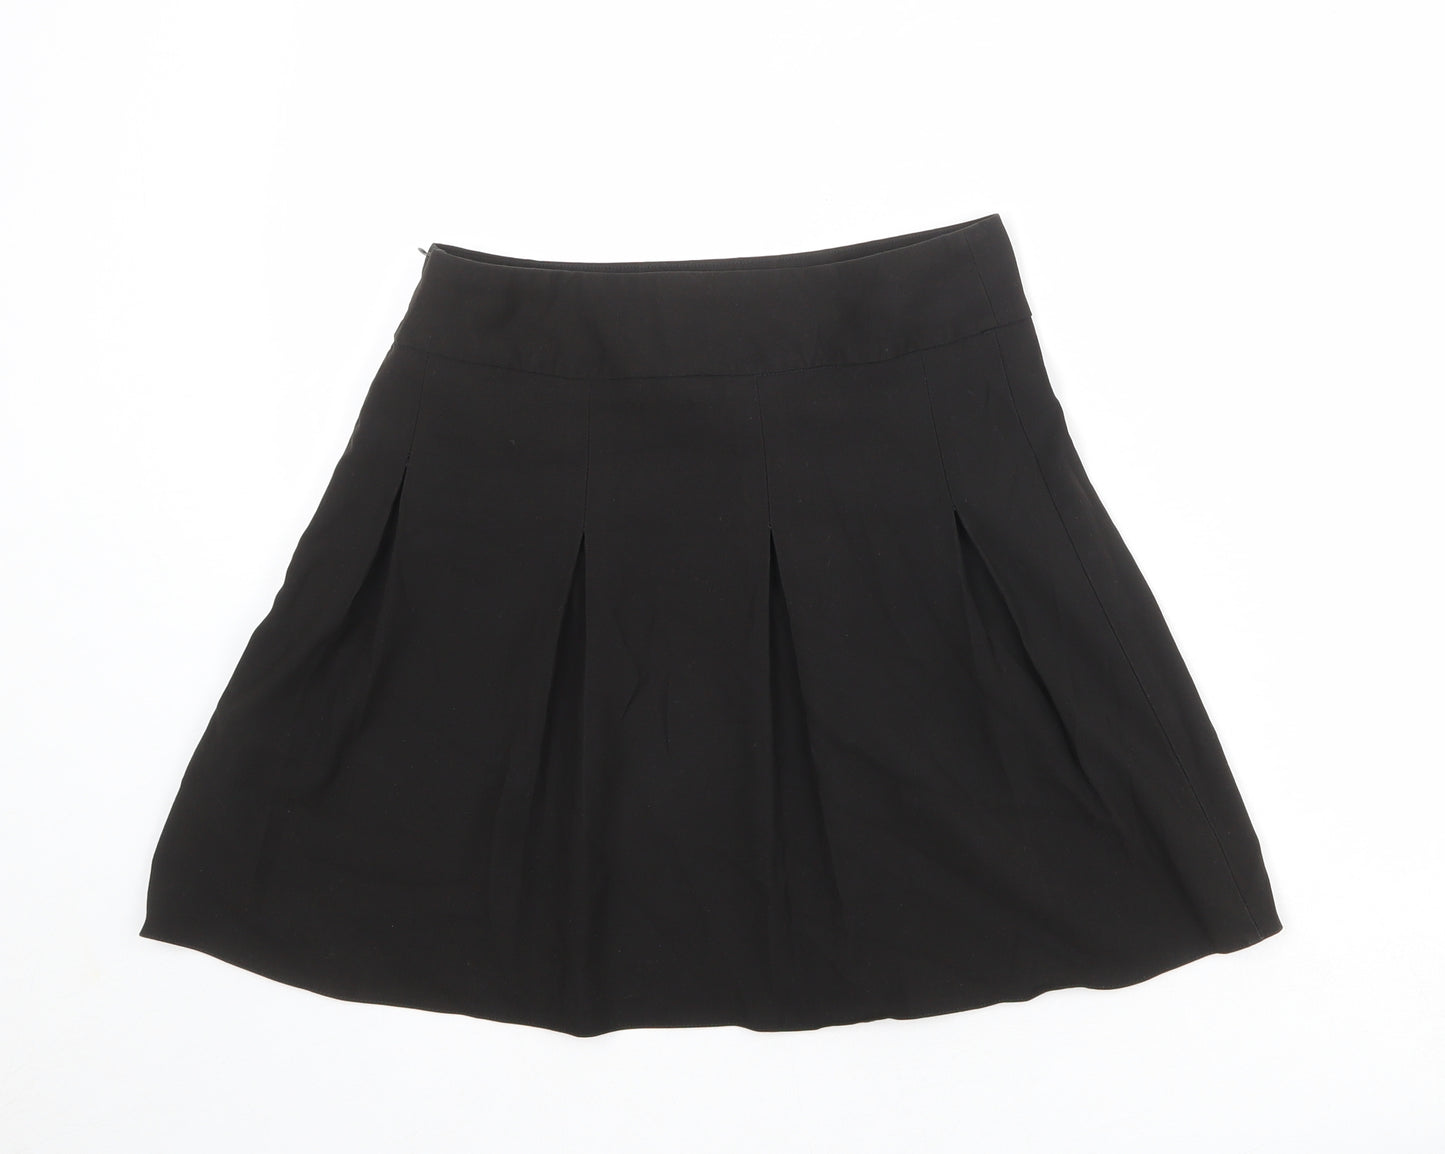 New Look Girls Black Polyester Pleated Skirt Size 14 Years Regular Zip